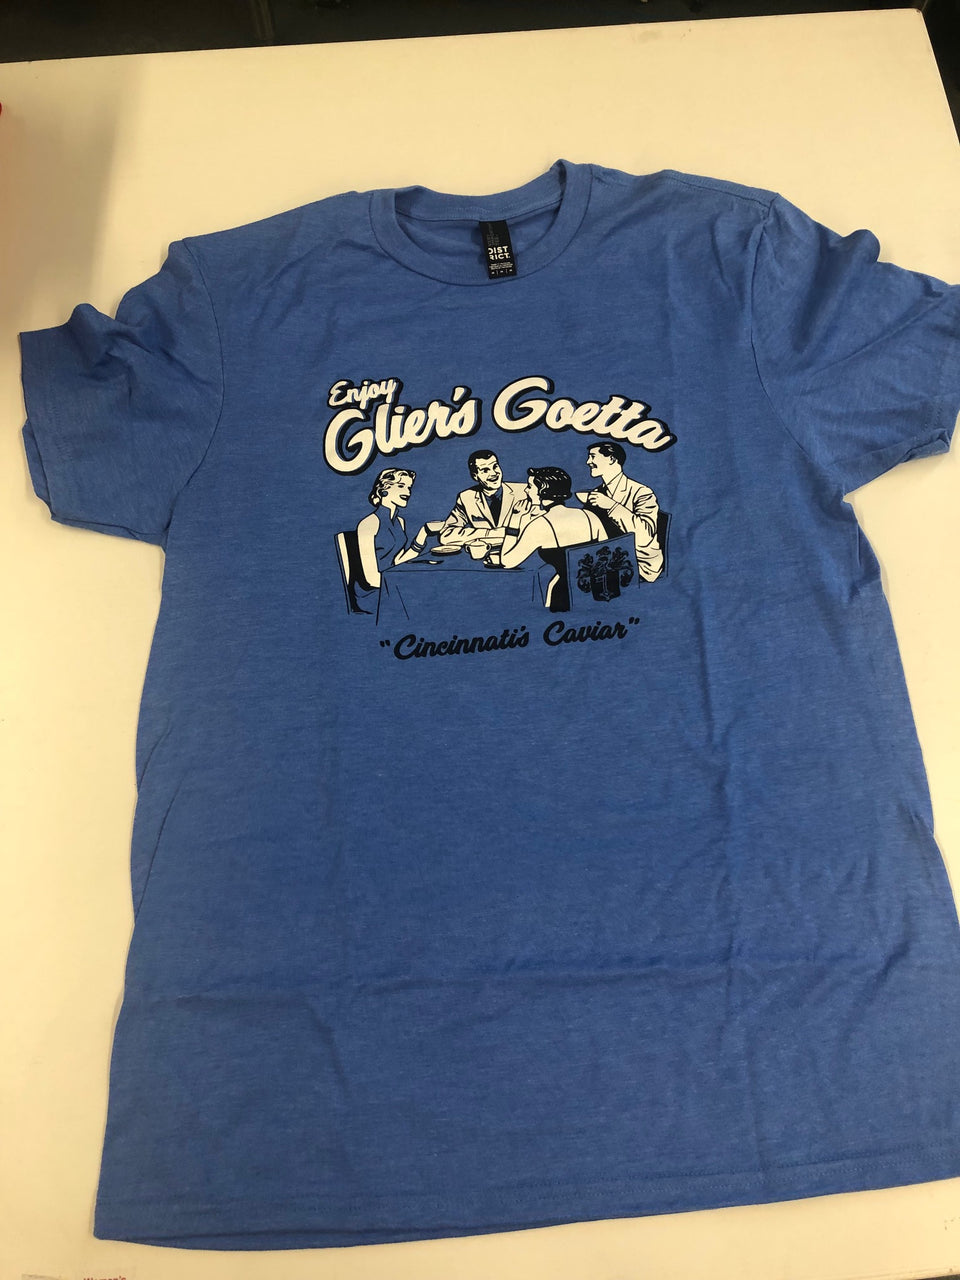 Enjoy Glier's Goetta - Cincy Shirts